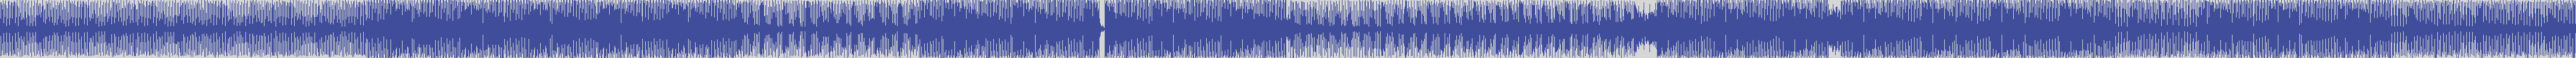 atomic_recordings [AR018] Francesco Squillante - Sprutz [Original Mix] audio wave form